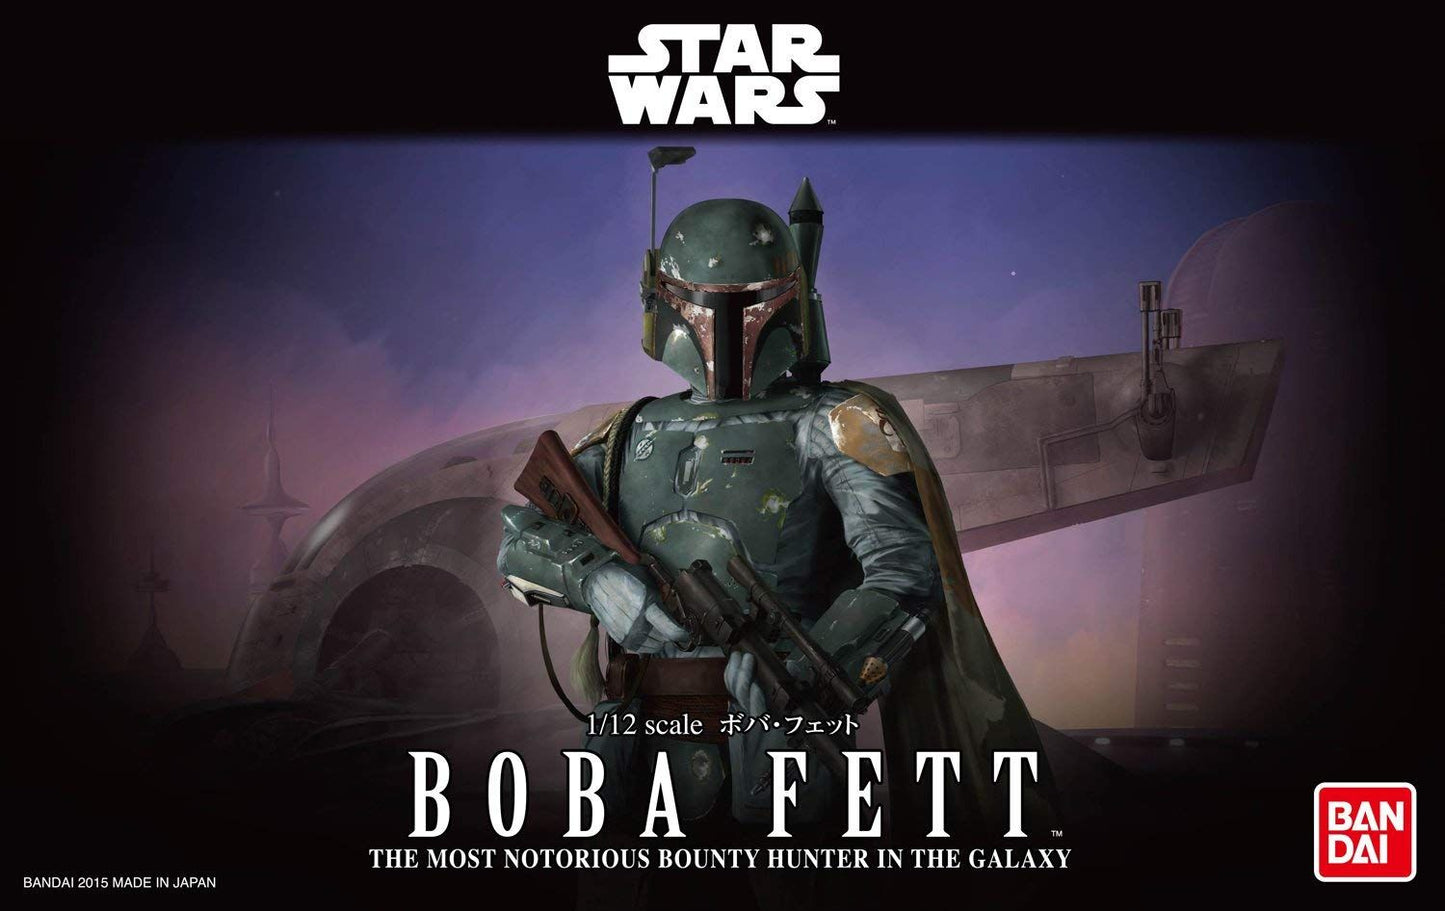 Bandai 0201305 1:12 Star Wars Boba Fett Plastic Model Kit